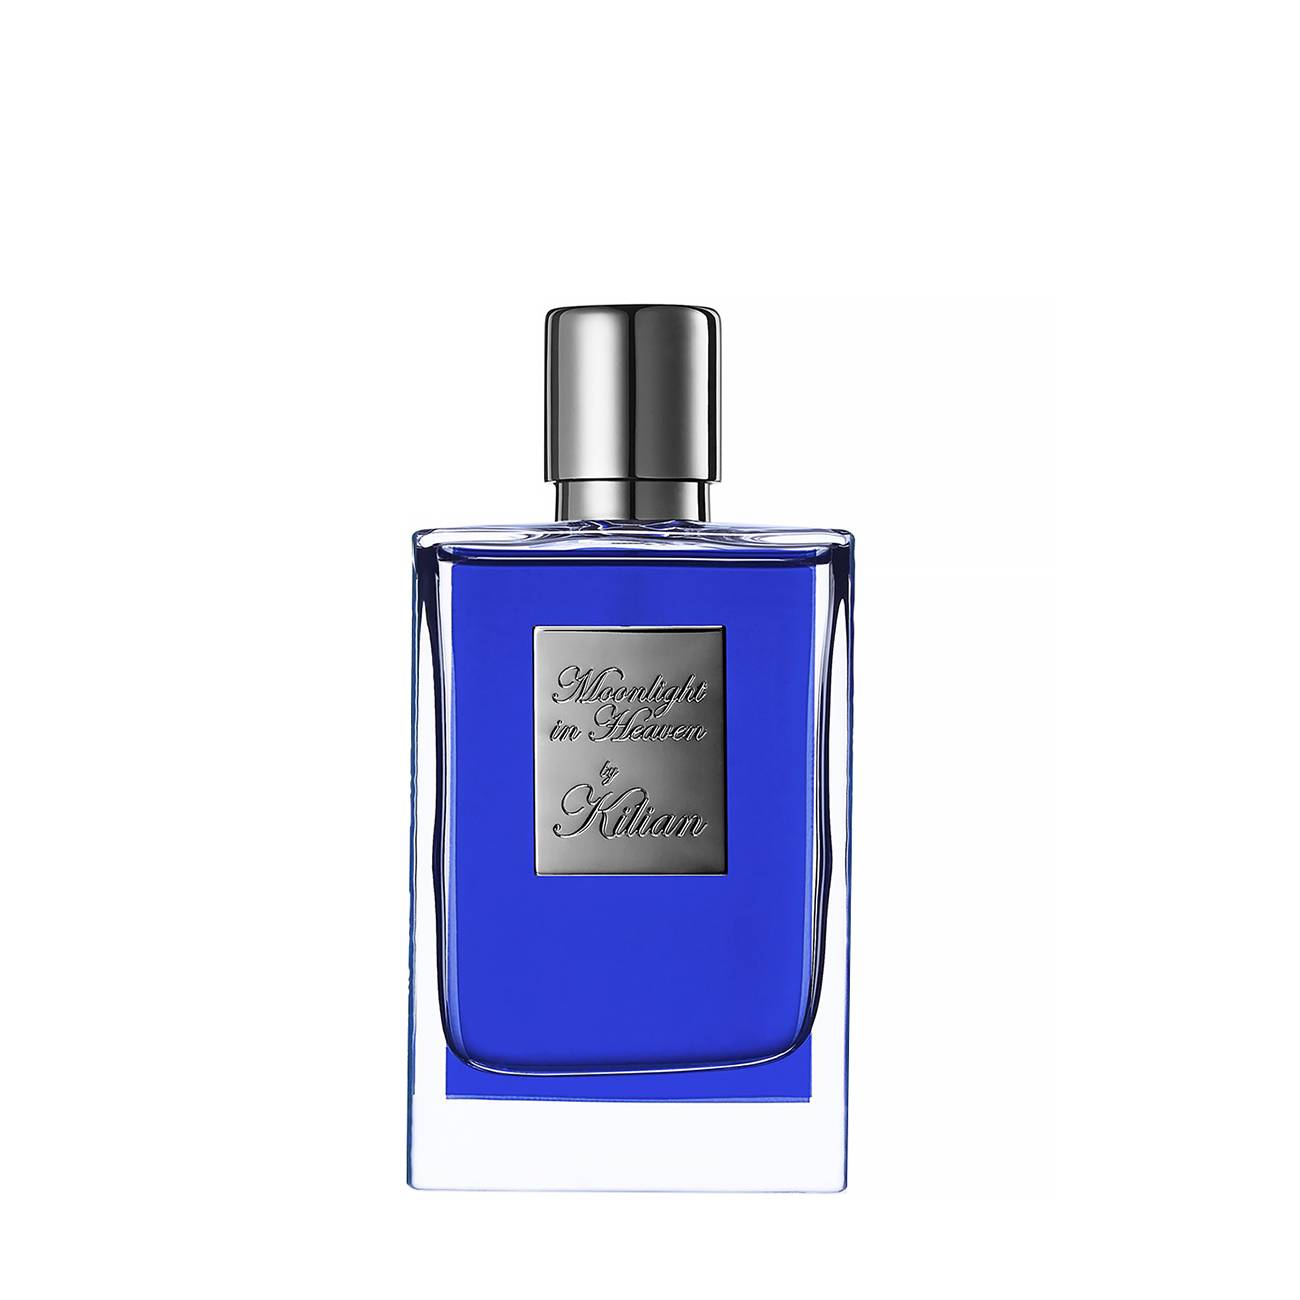 Parfum de niche Kilian MOONLIGHT IN HEAVEN WITH COFFRET 50ml cu comanda online